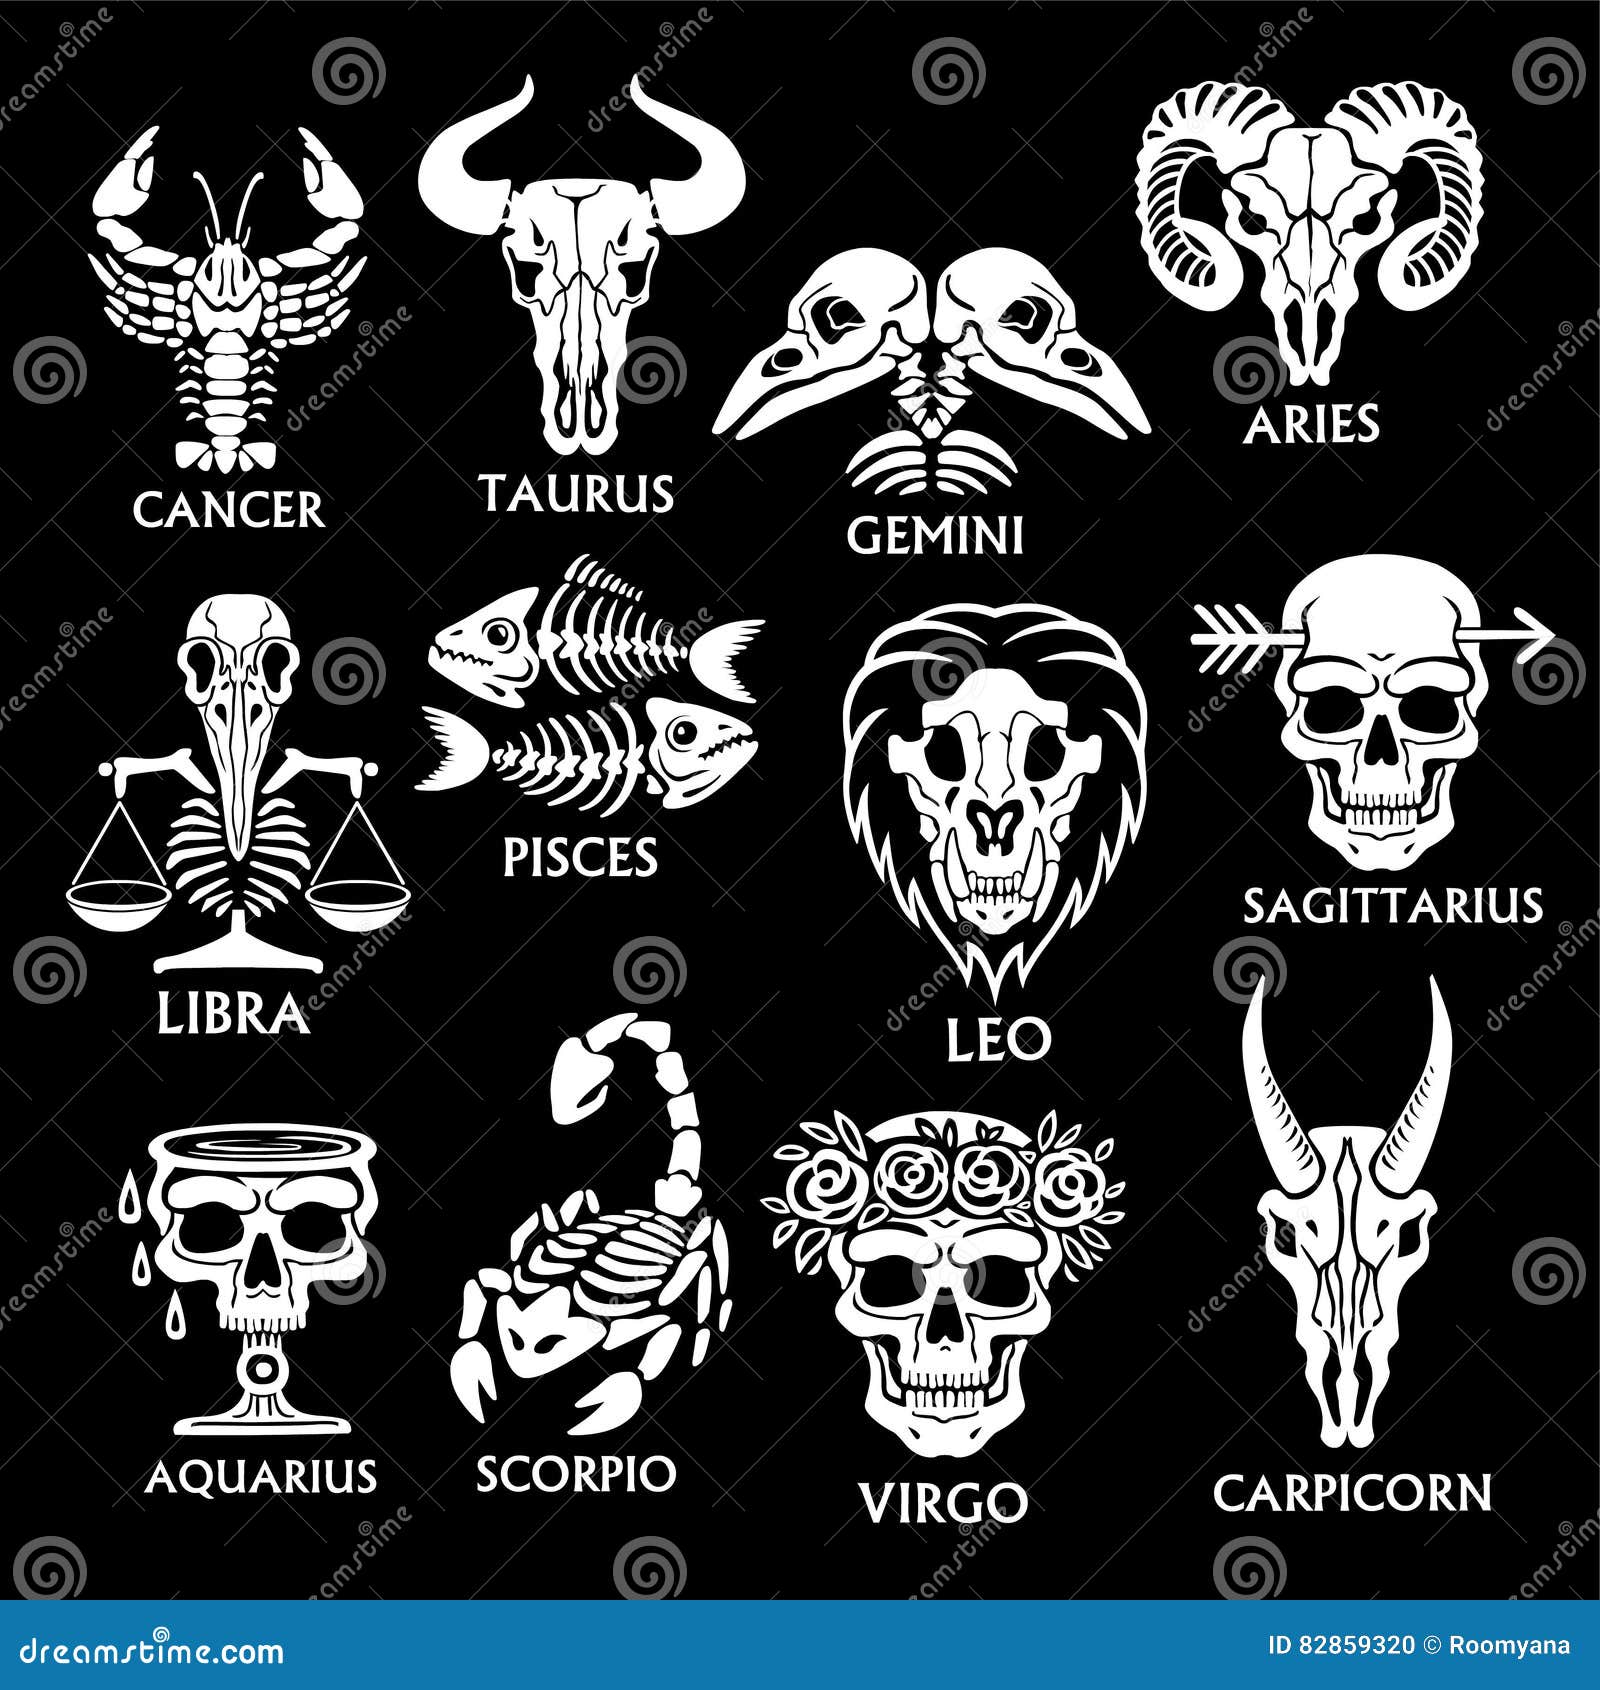 Premium Vector  Zodiac virgo signs halloween skull bones objects icons  stars graphics black and white print